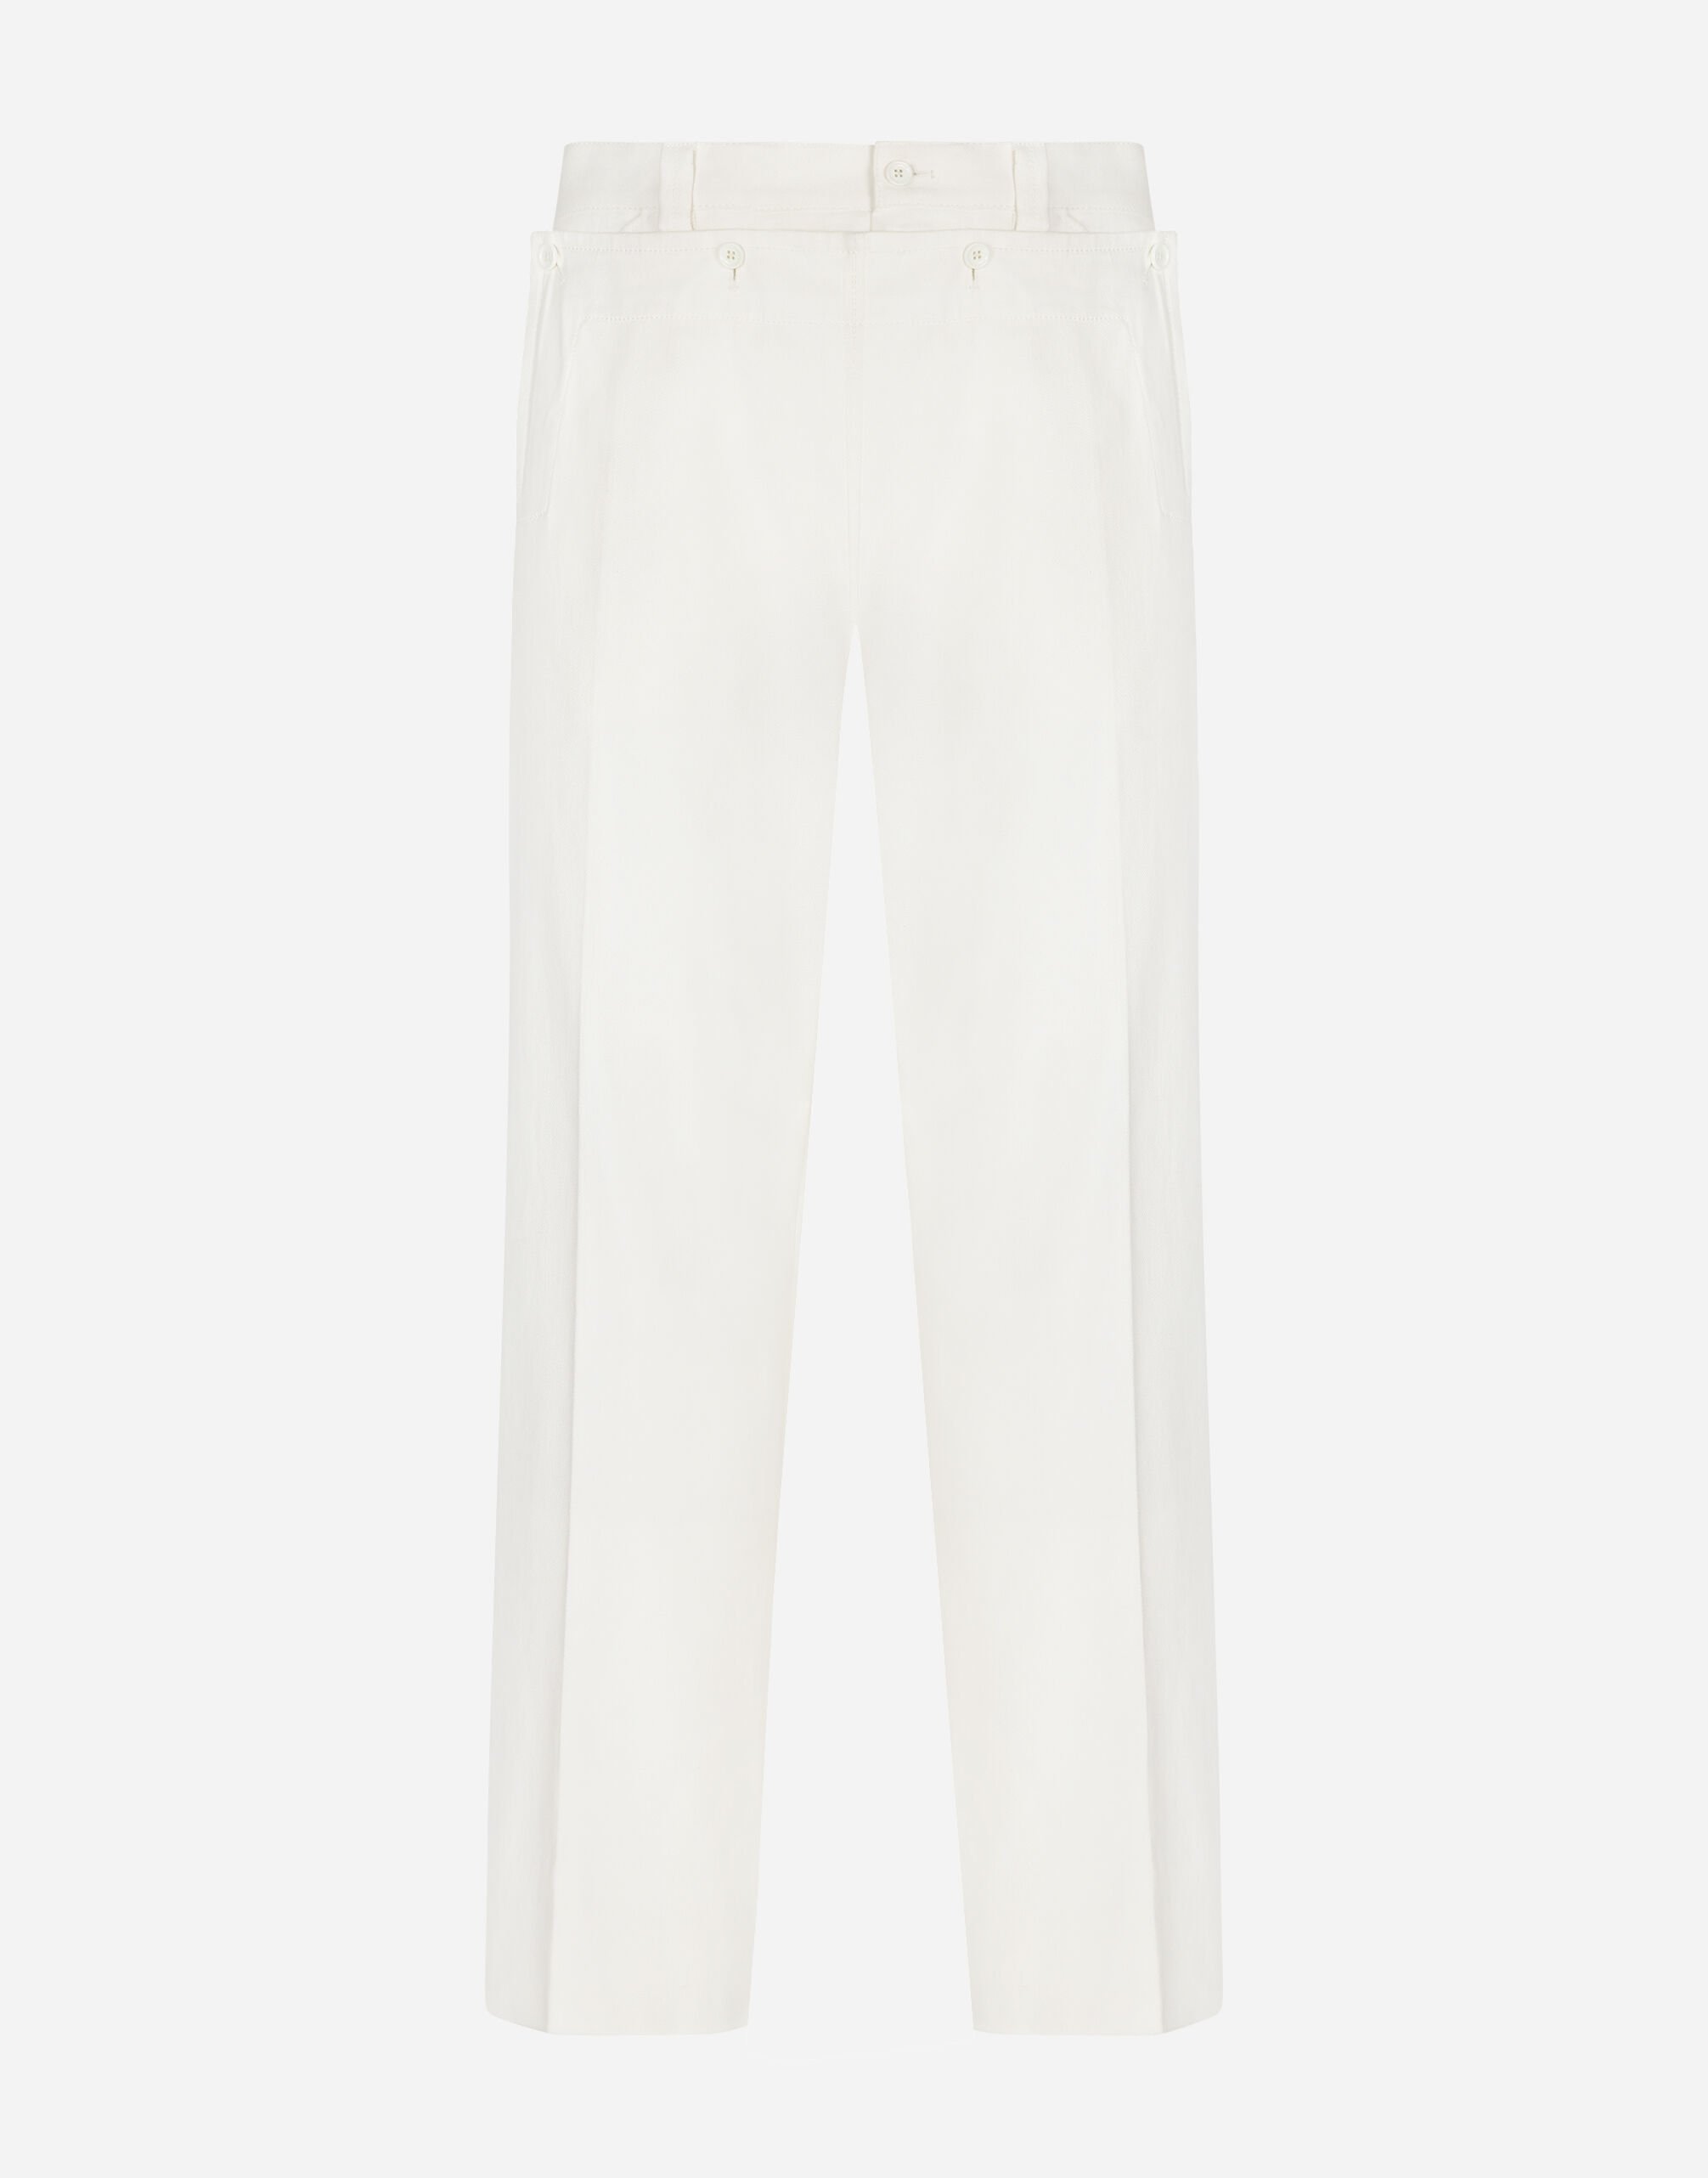 Dolce & Gabbana Sailor-style stretch cotton pants White G2QS6TFR4A4